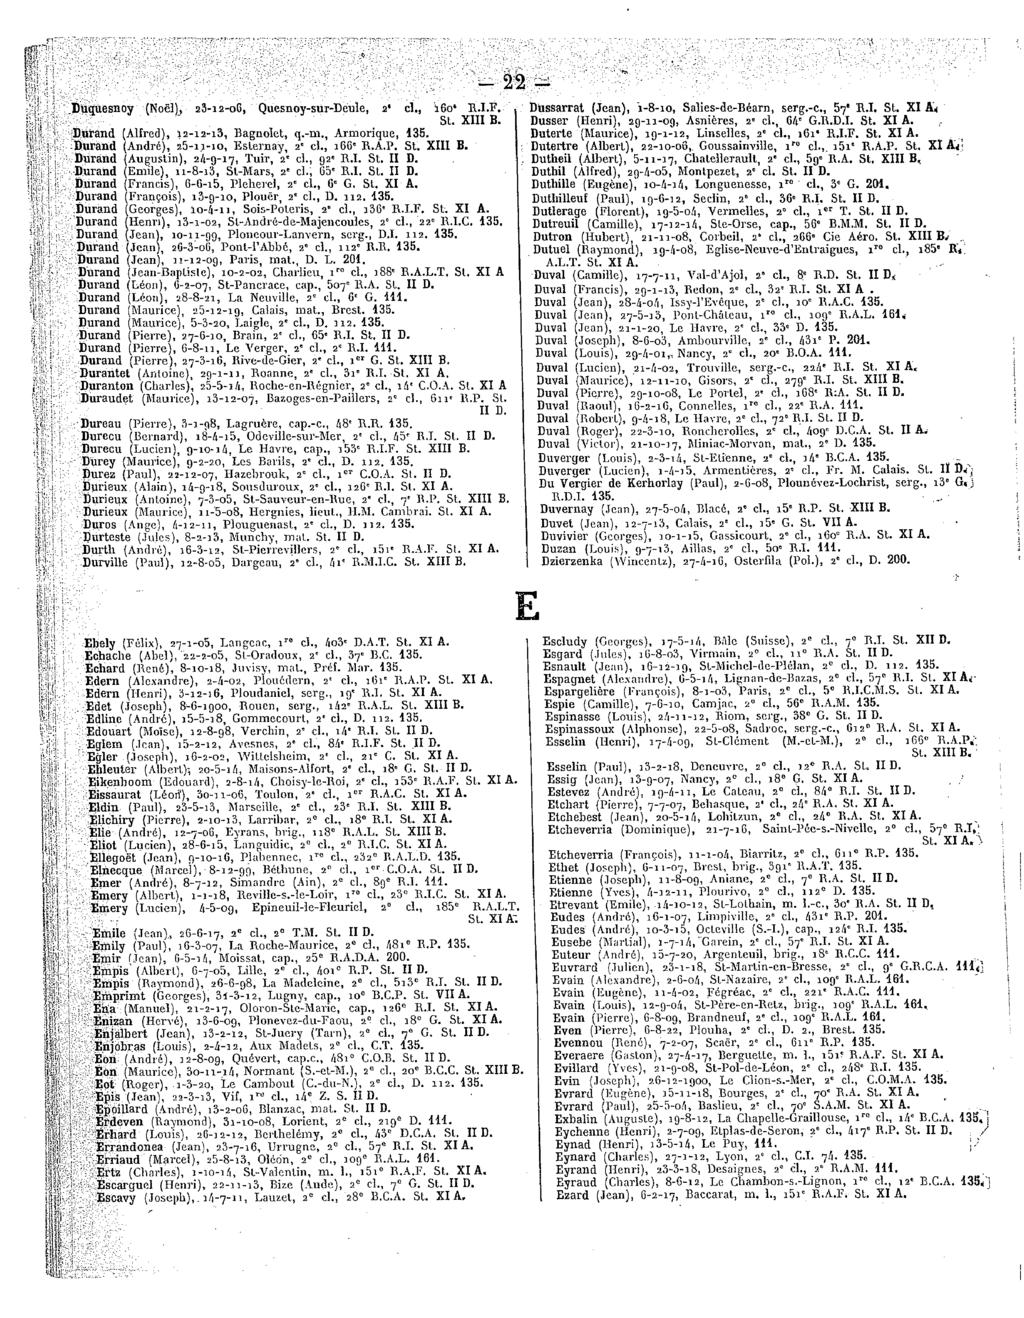 Euquesnoy(Noël),23-i2-oG,Quesnoy-sur-Deuïe, 2* cl., 160'R.I.F. St.XIIIB. Durand(Alfred), 12-12-13, Bagnolet, q.-m.,armorique, 135. Durand(André), 25-11-10, Eslernay,2"cl.,166*R.A.PṠt.XIIIB. Durand(Augustin), 24-9-17, Tuir,2' cl.